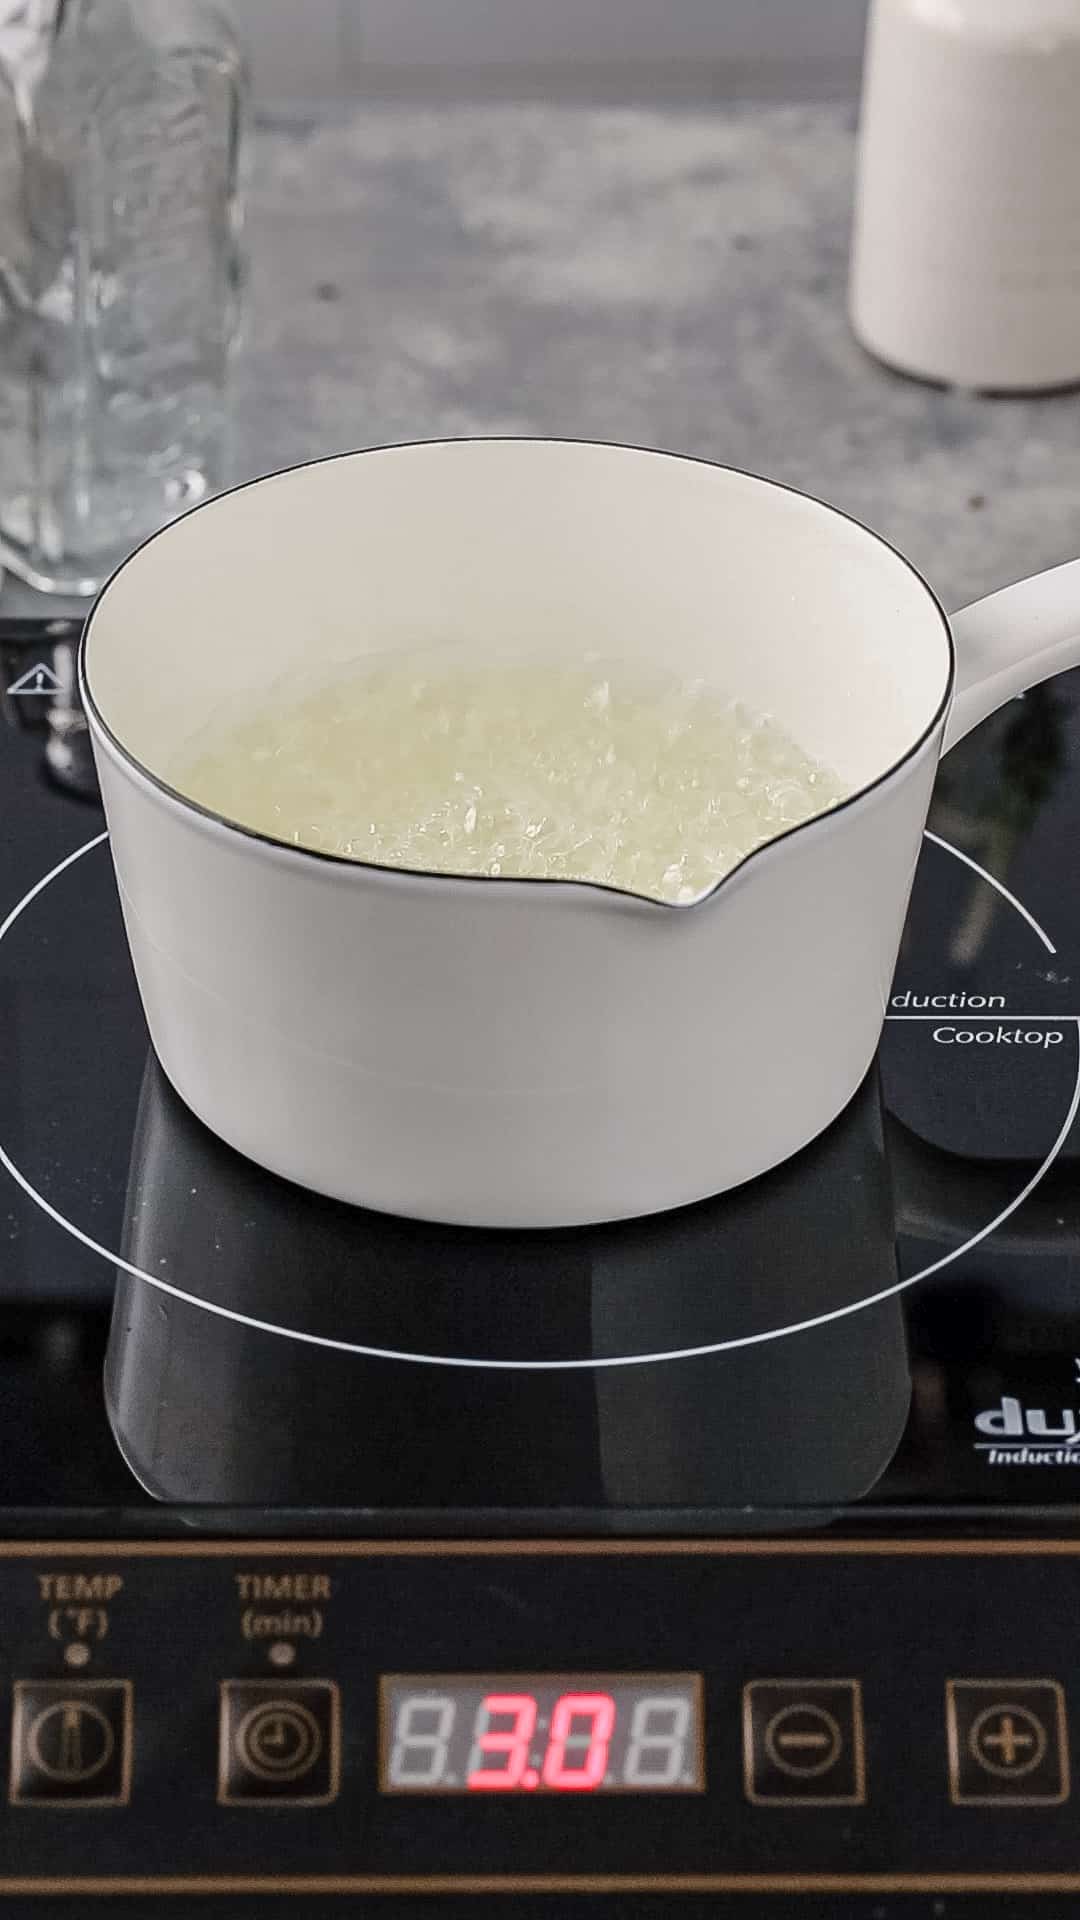 Liquid in a white pot boiling.